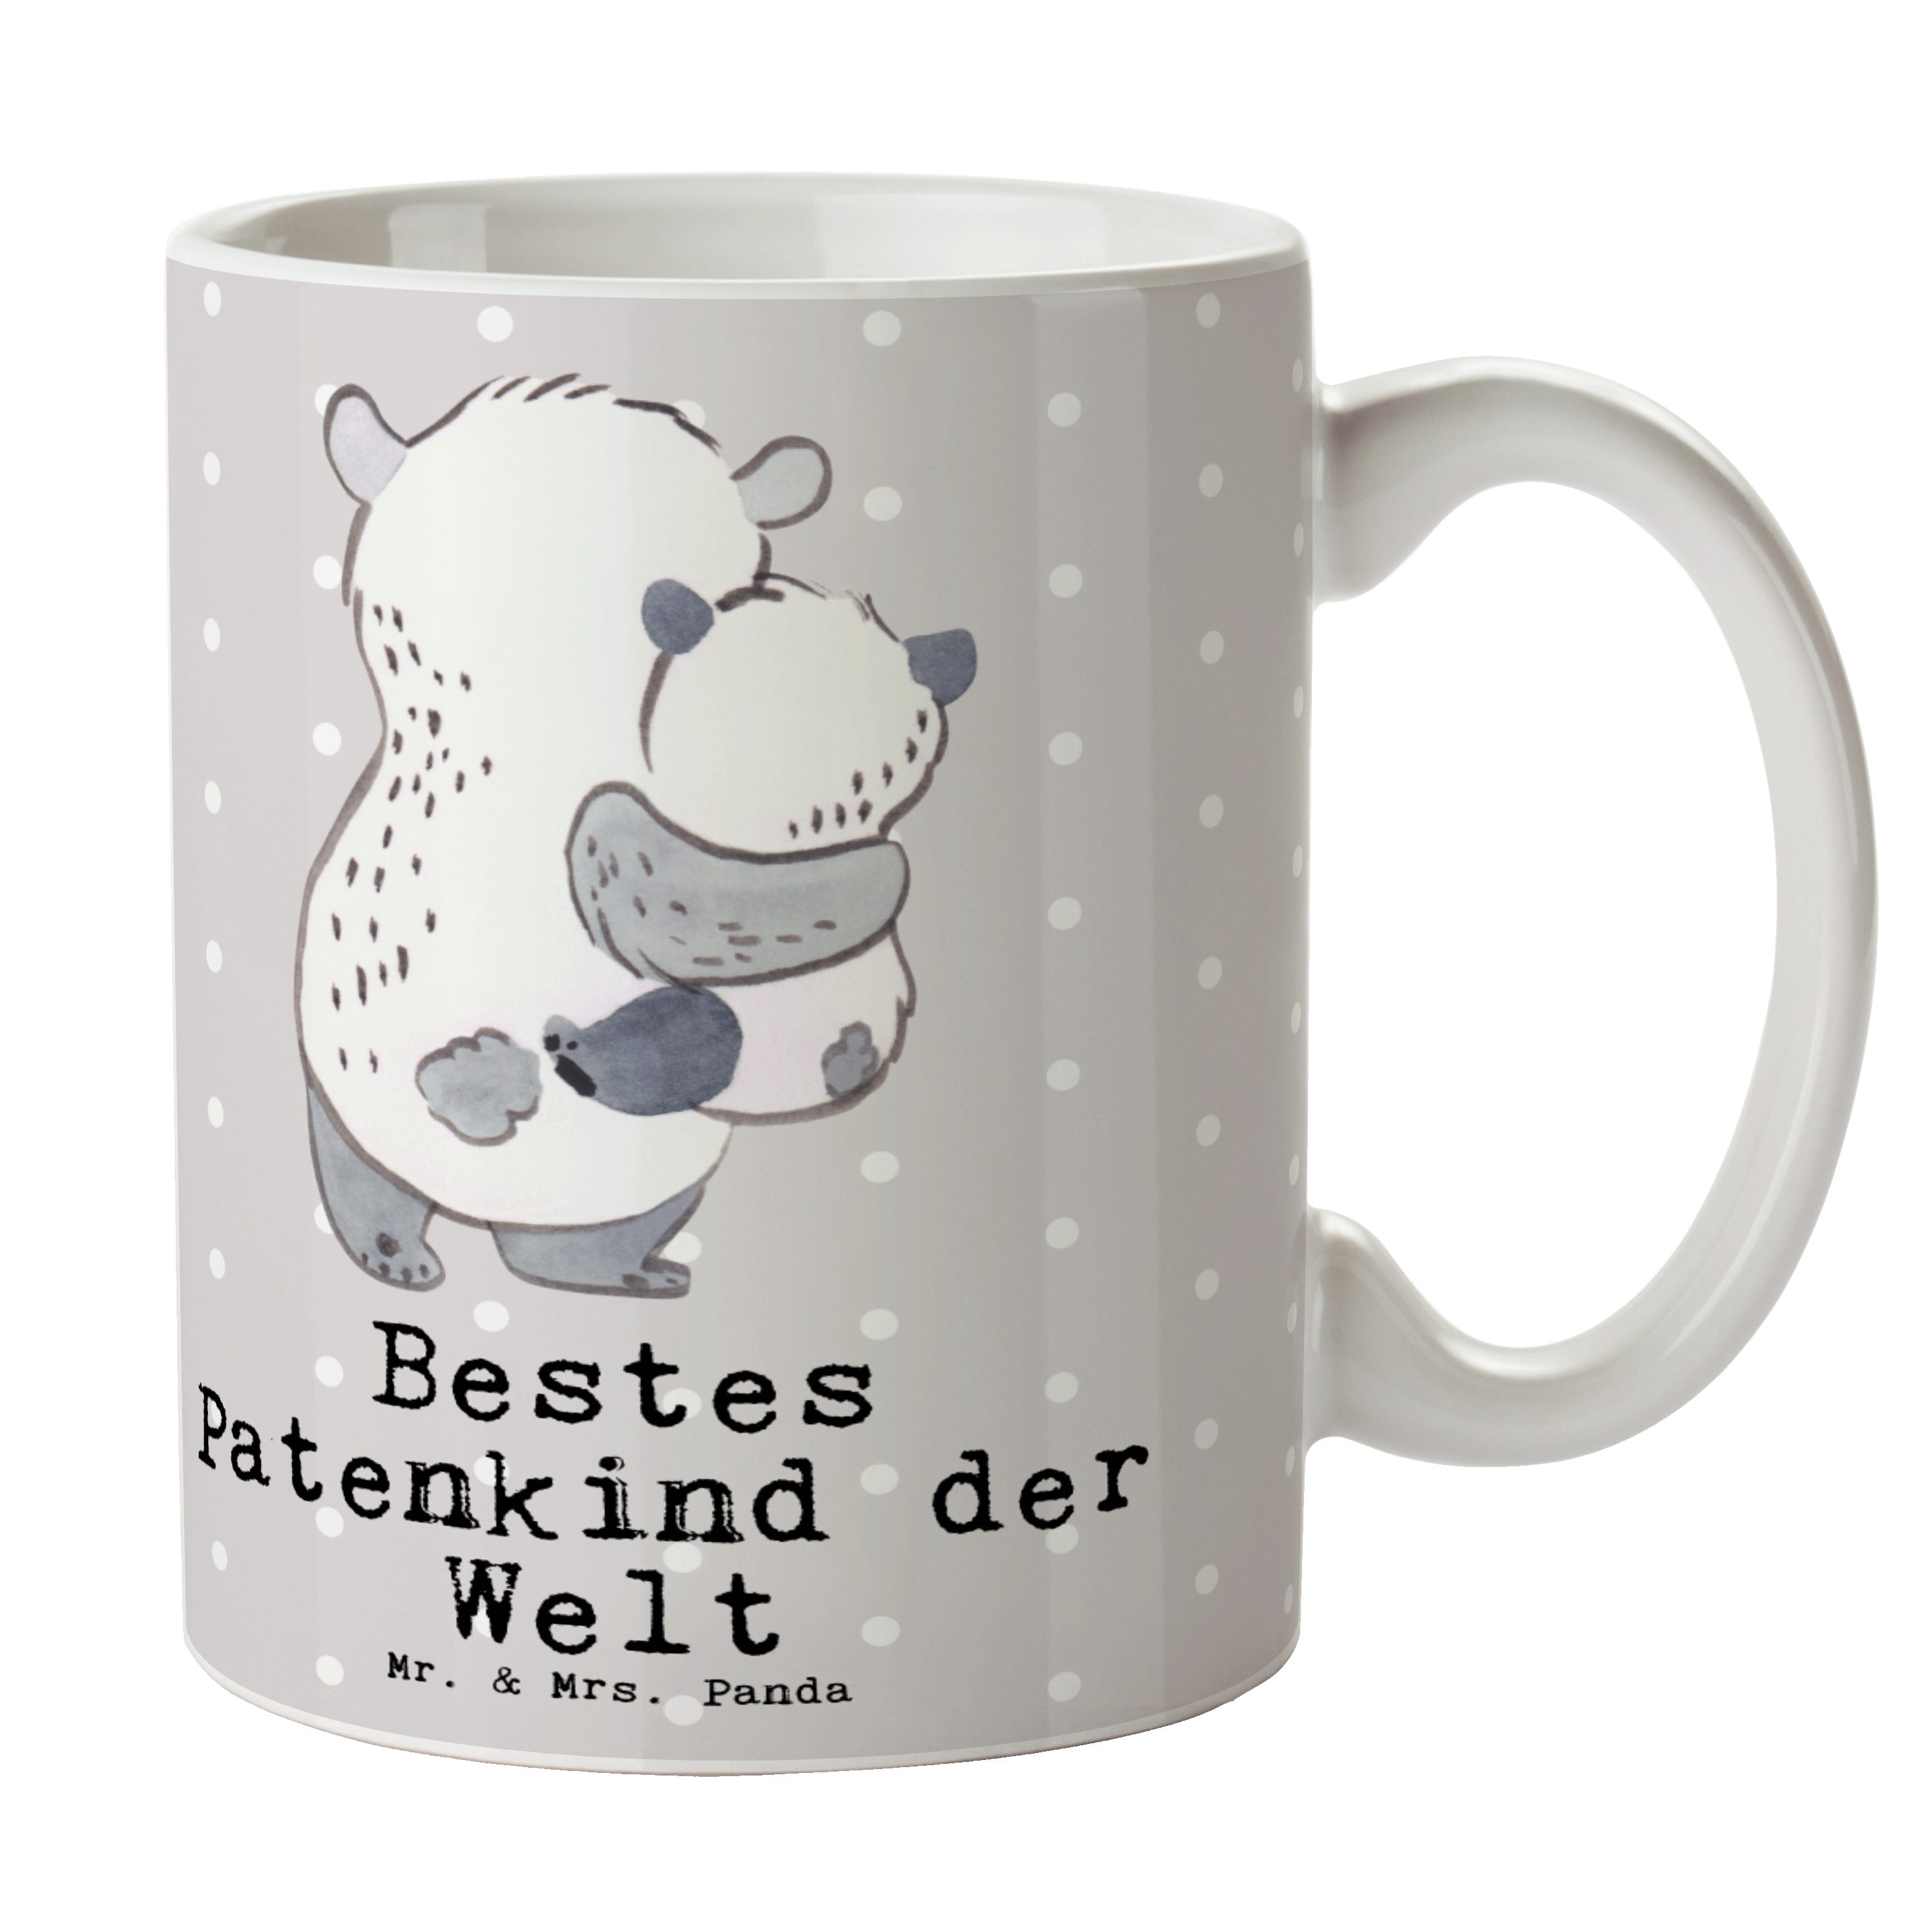 Mr. & Mrs. Panda Tasse Panda Bestes Patenkind der Welt - Grau Pastell - Geschenk, Teetasse, Keramik